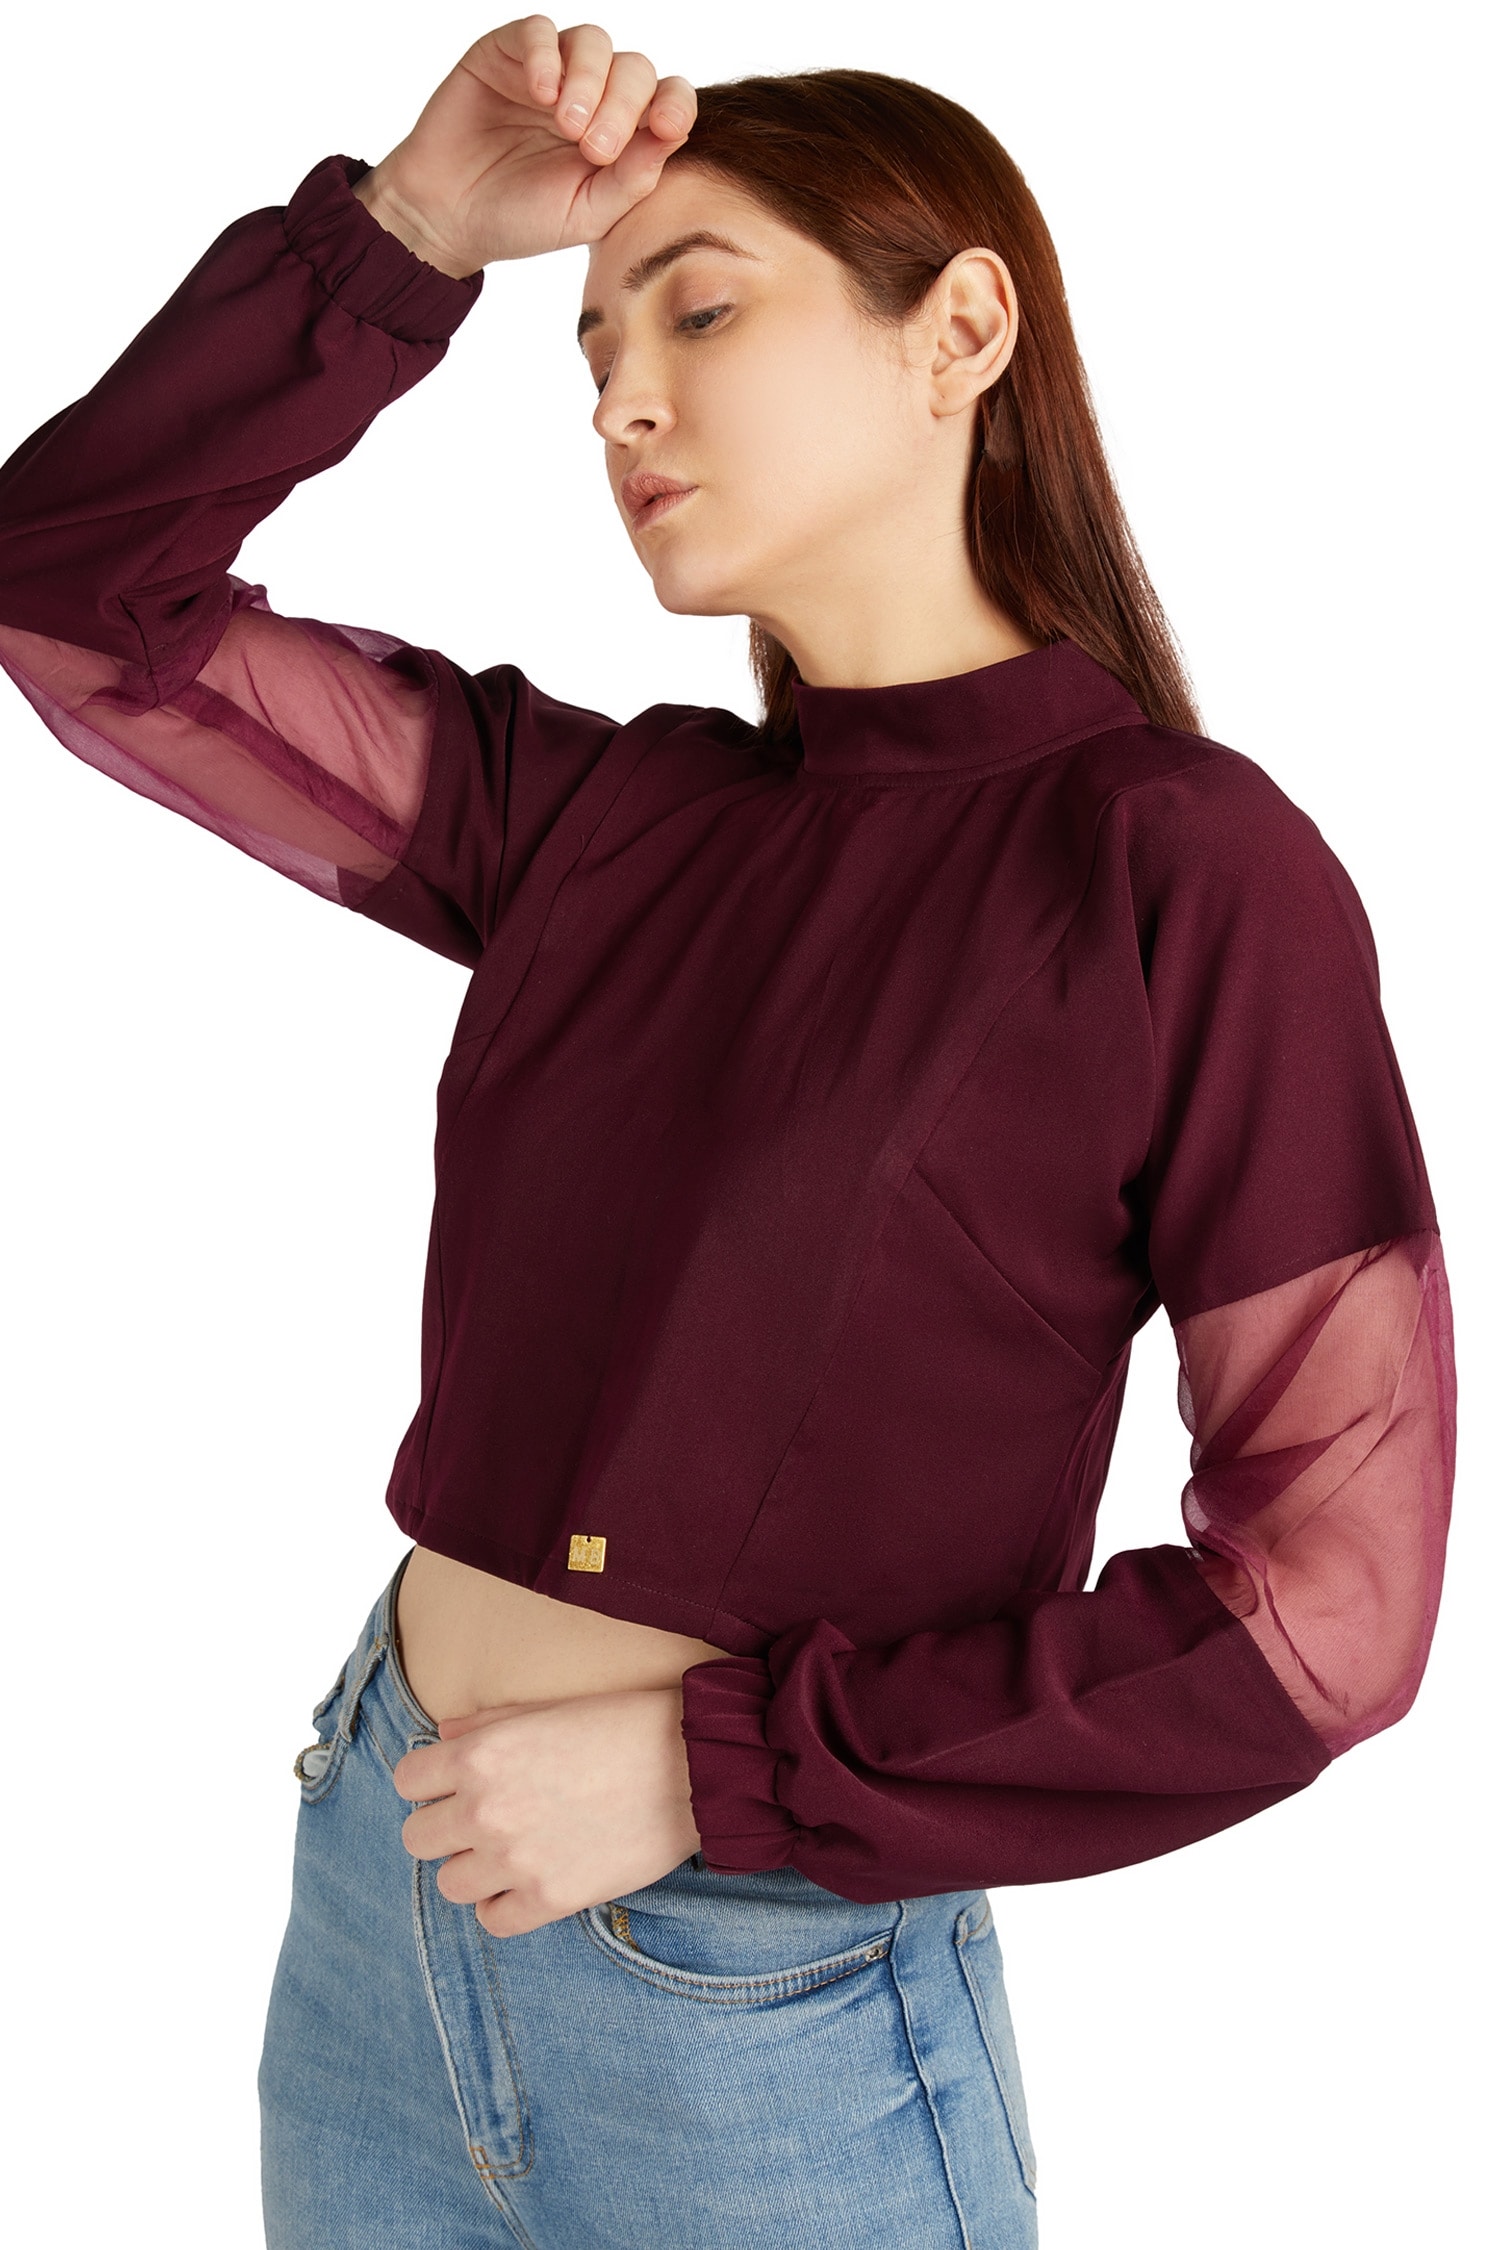 UBE- Long sleeve cropped top in lilac – Flexeve Wear